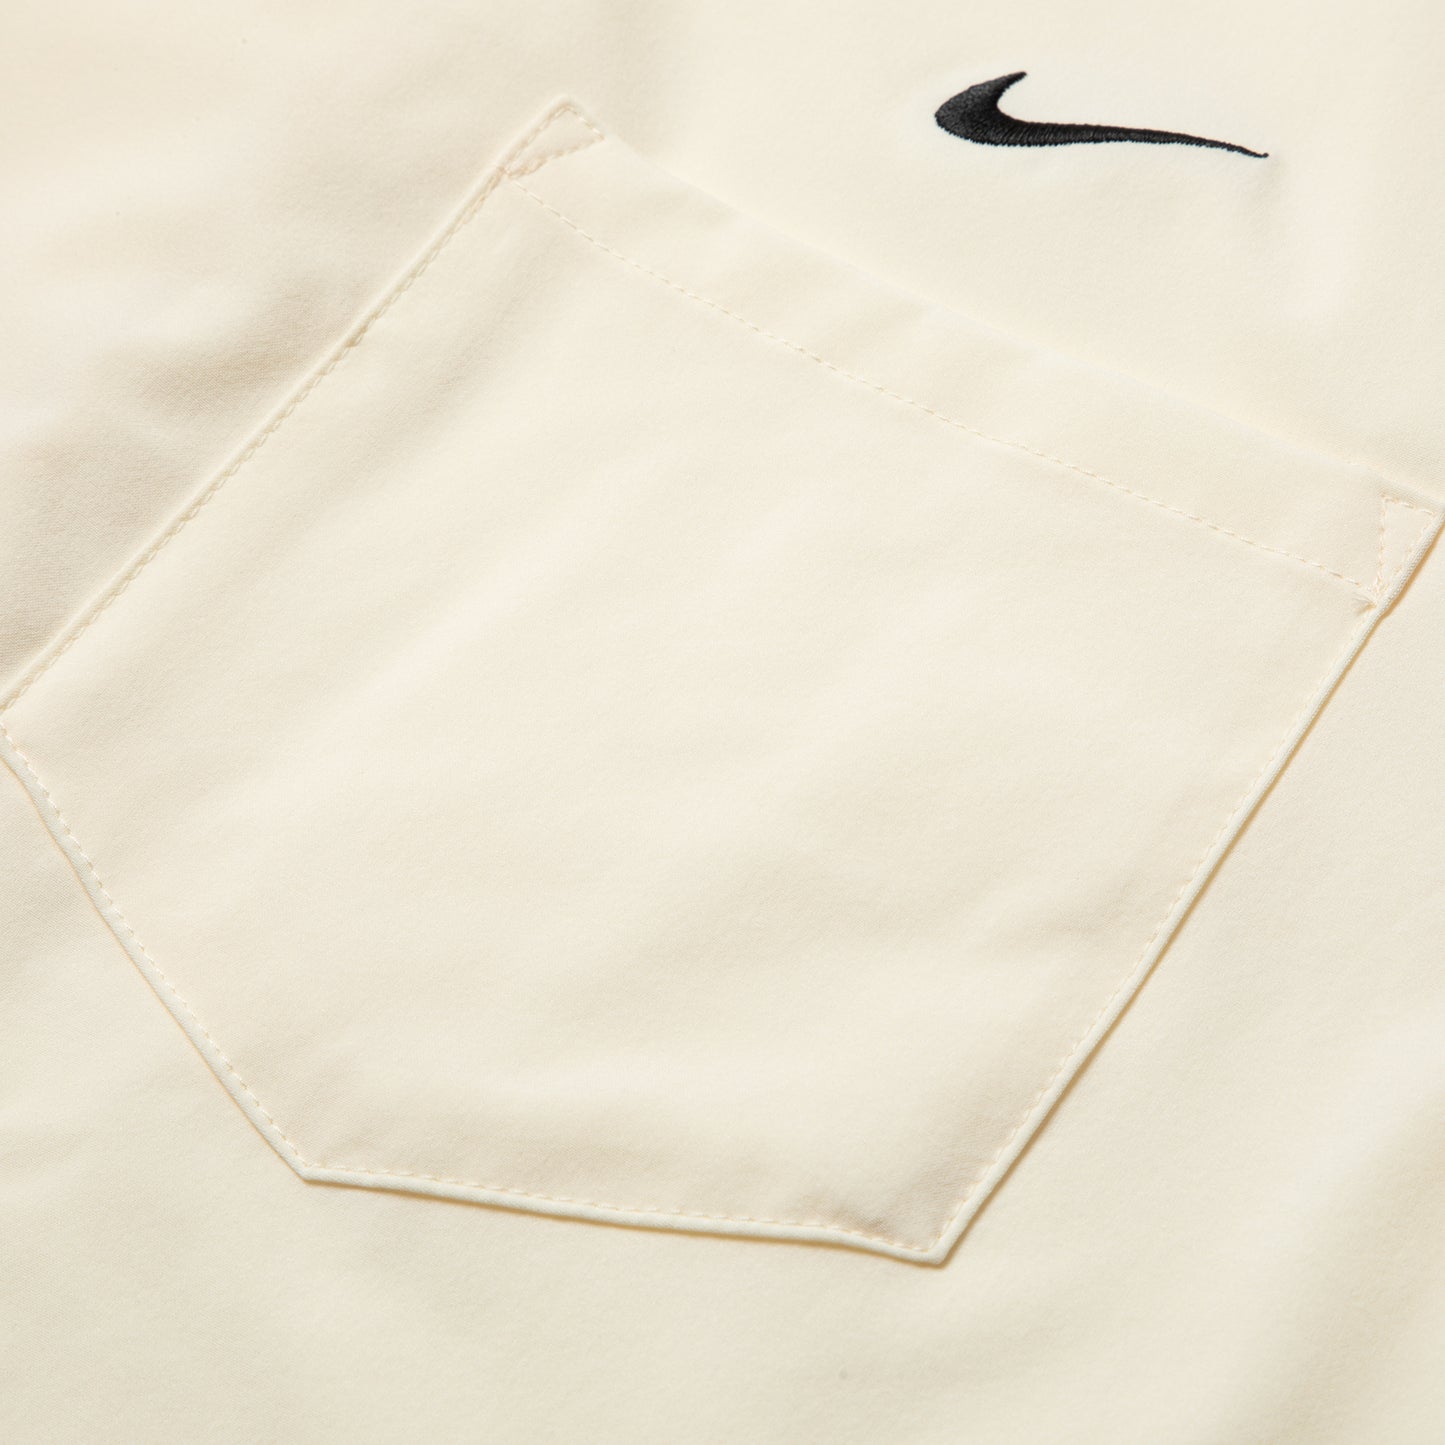 Nike SB Short Sleeve Bowling Shirt (Coconut Milk/Black)